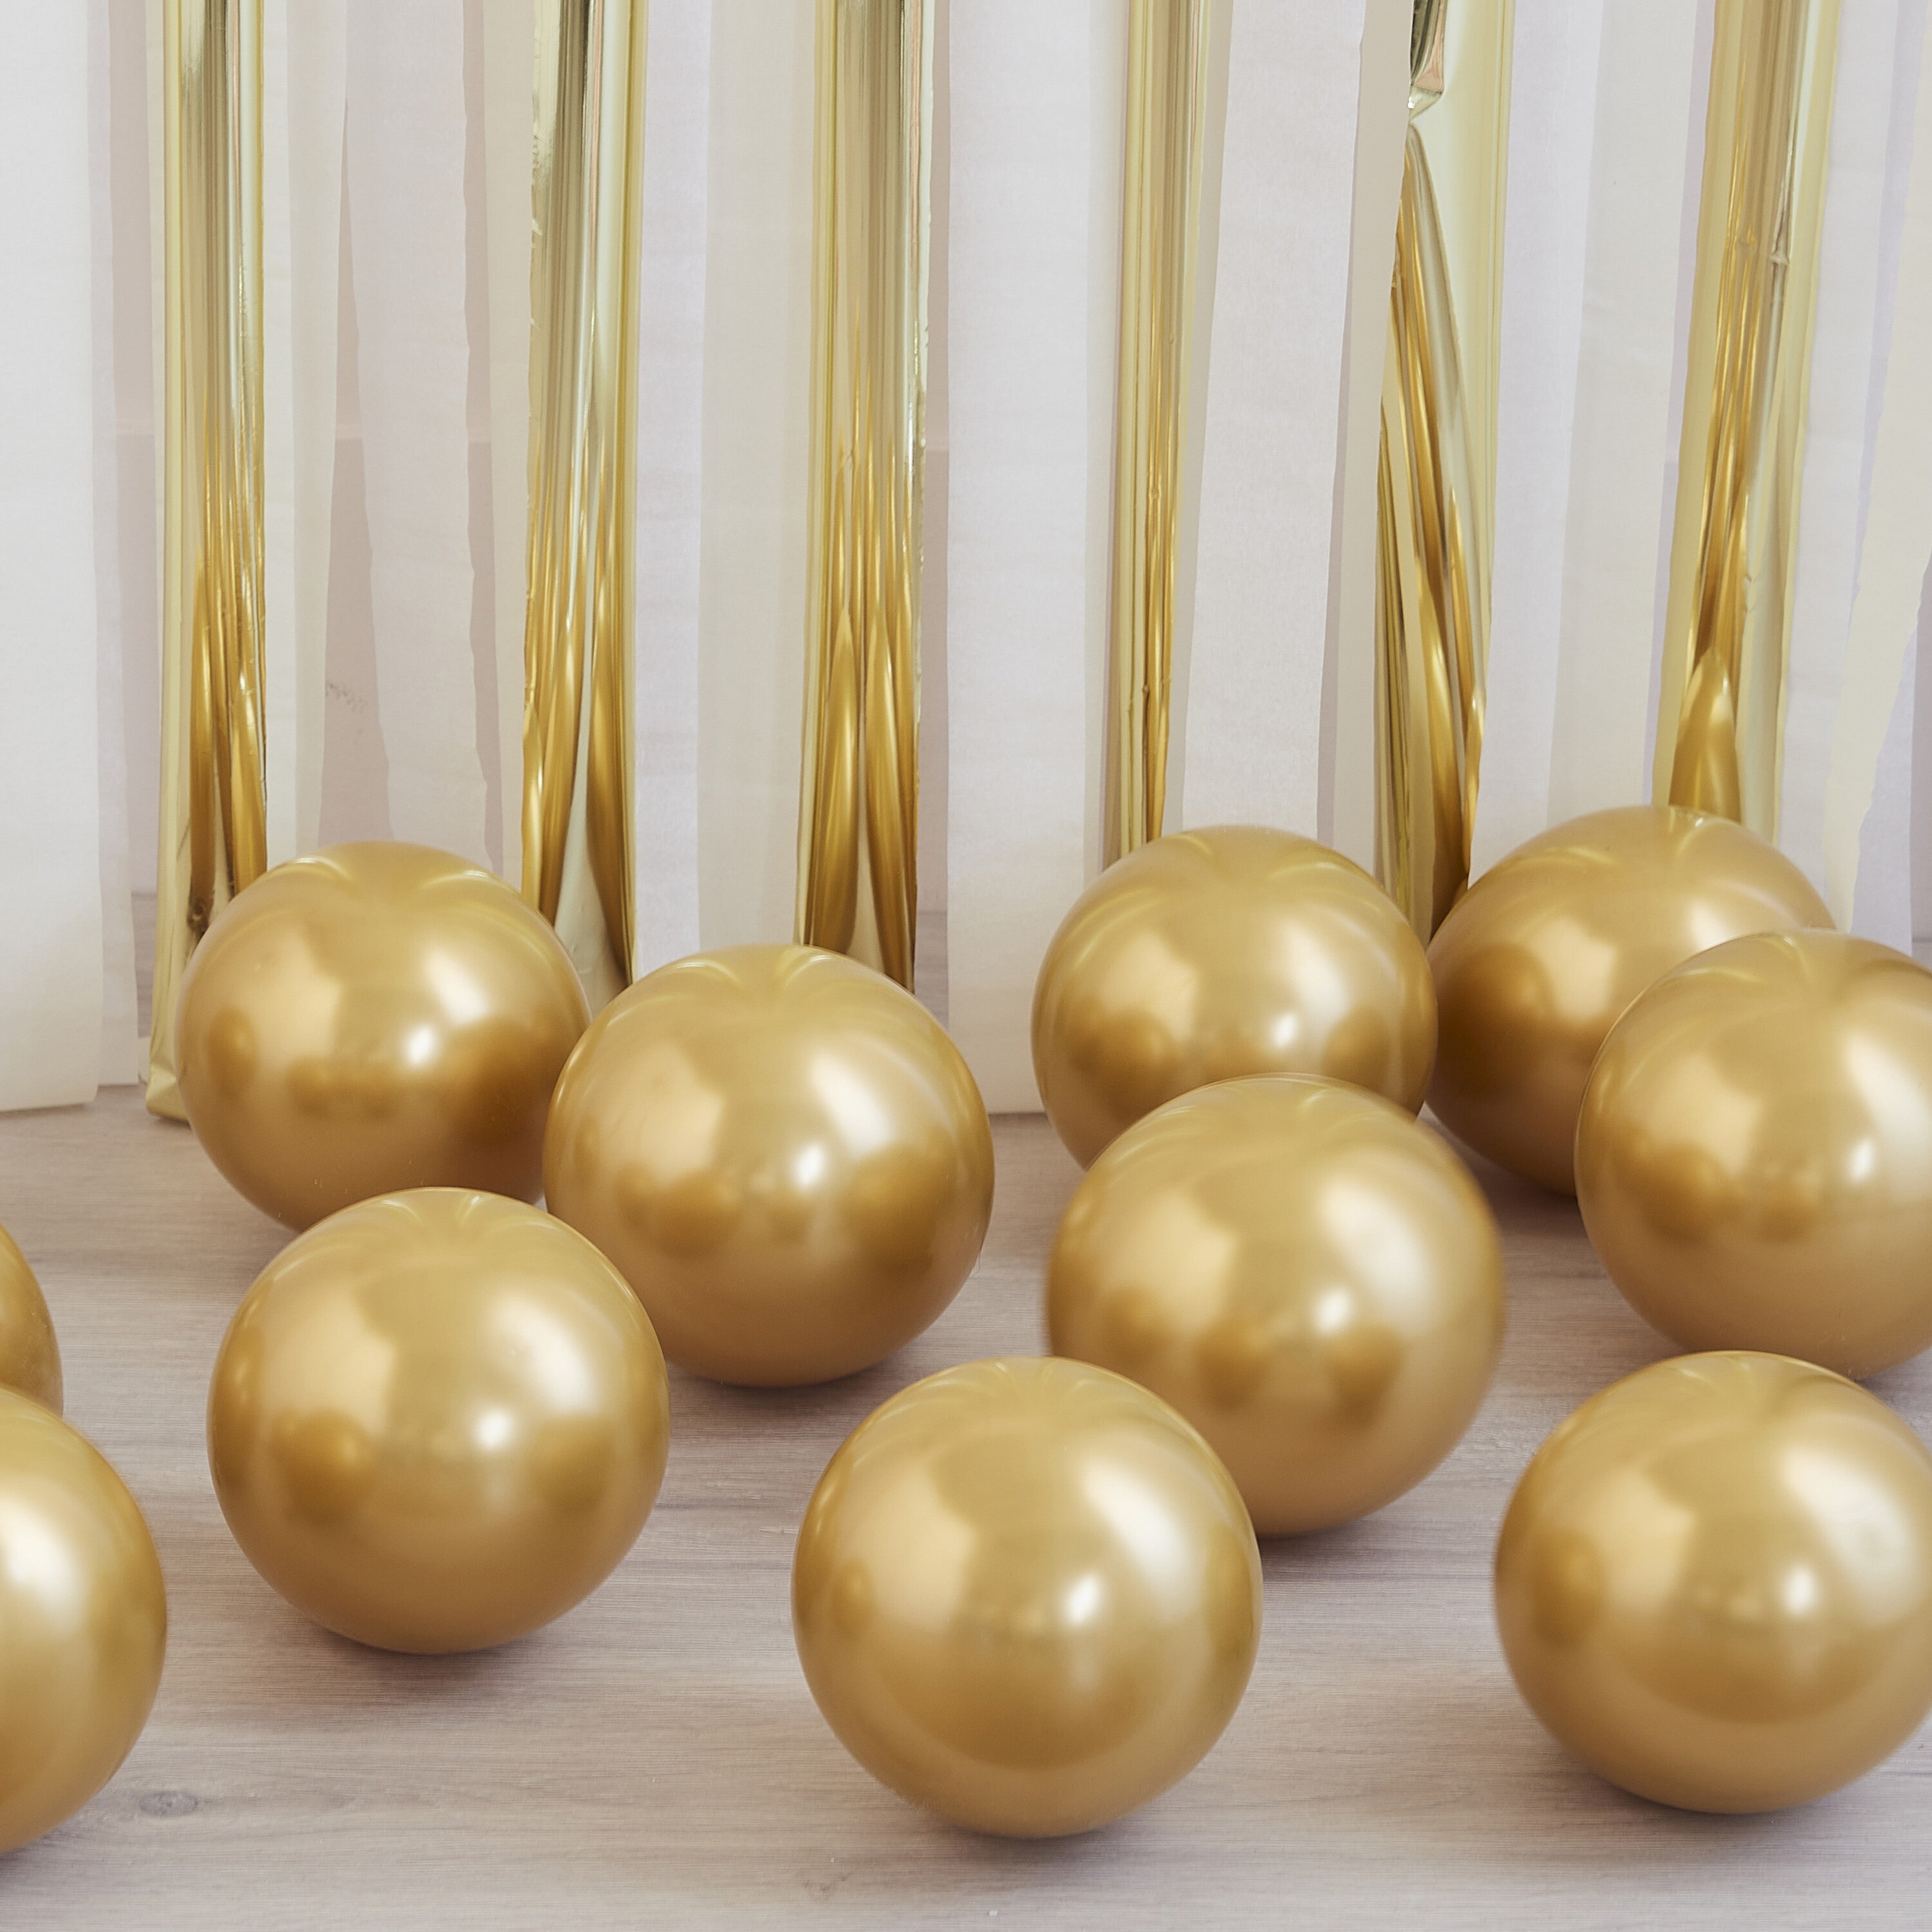 5 Inch Gold Chrome Balloons 40pk